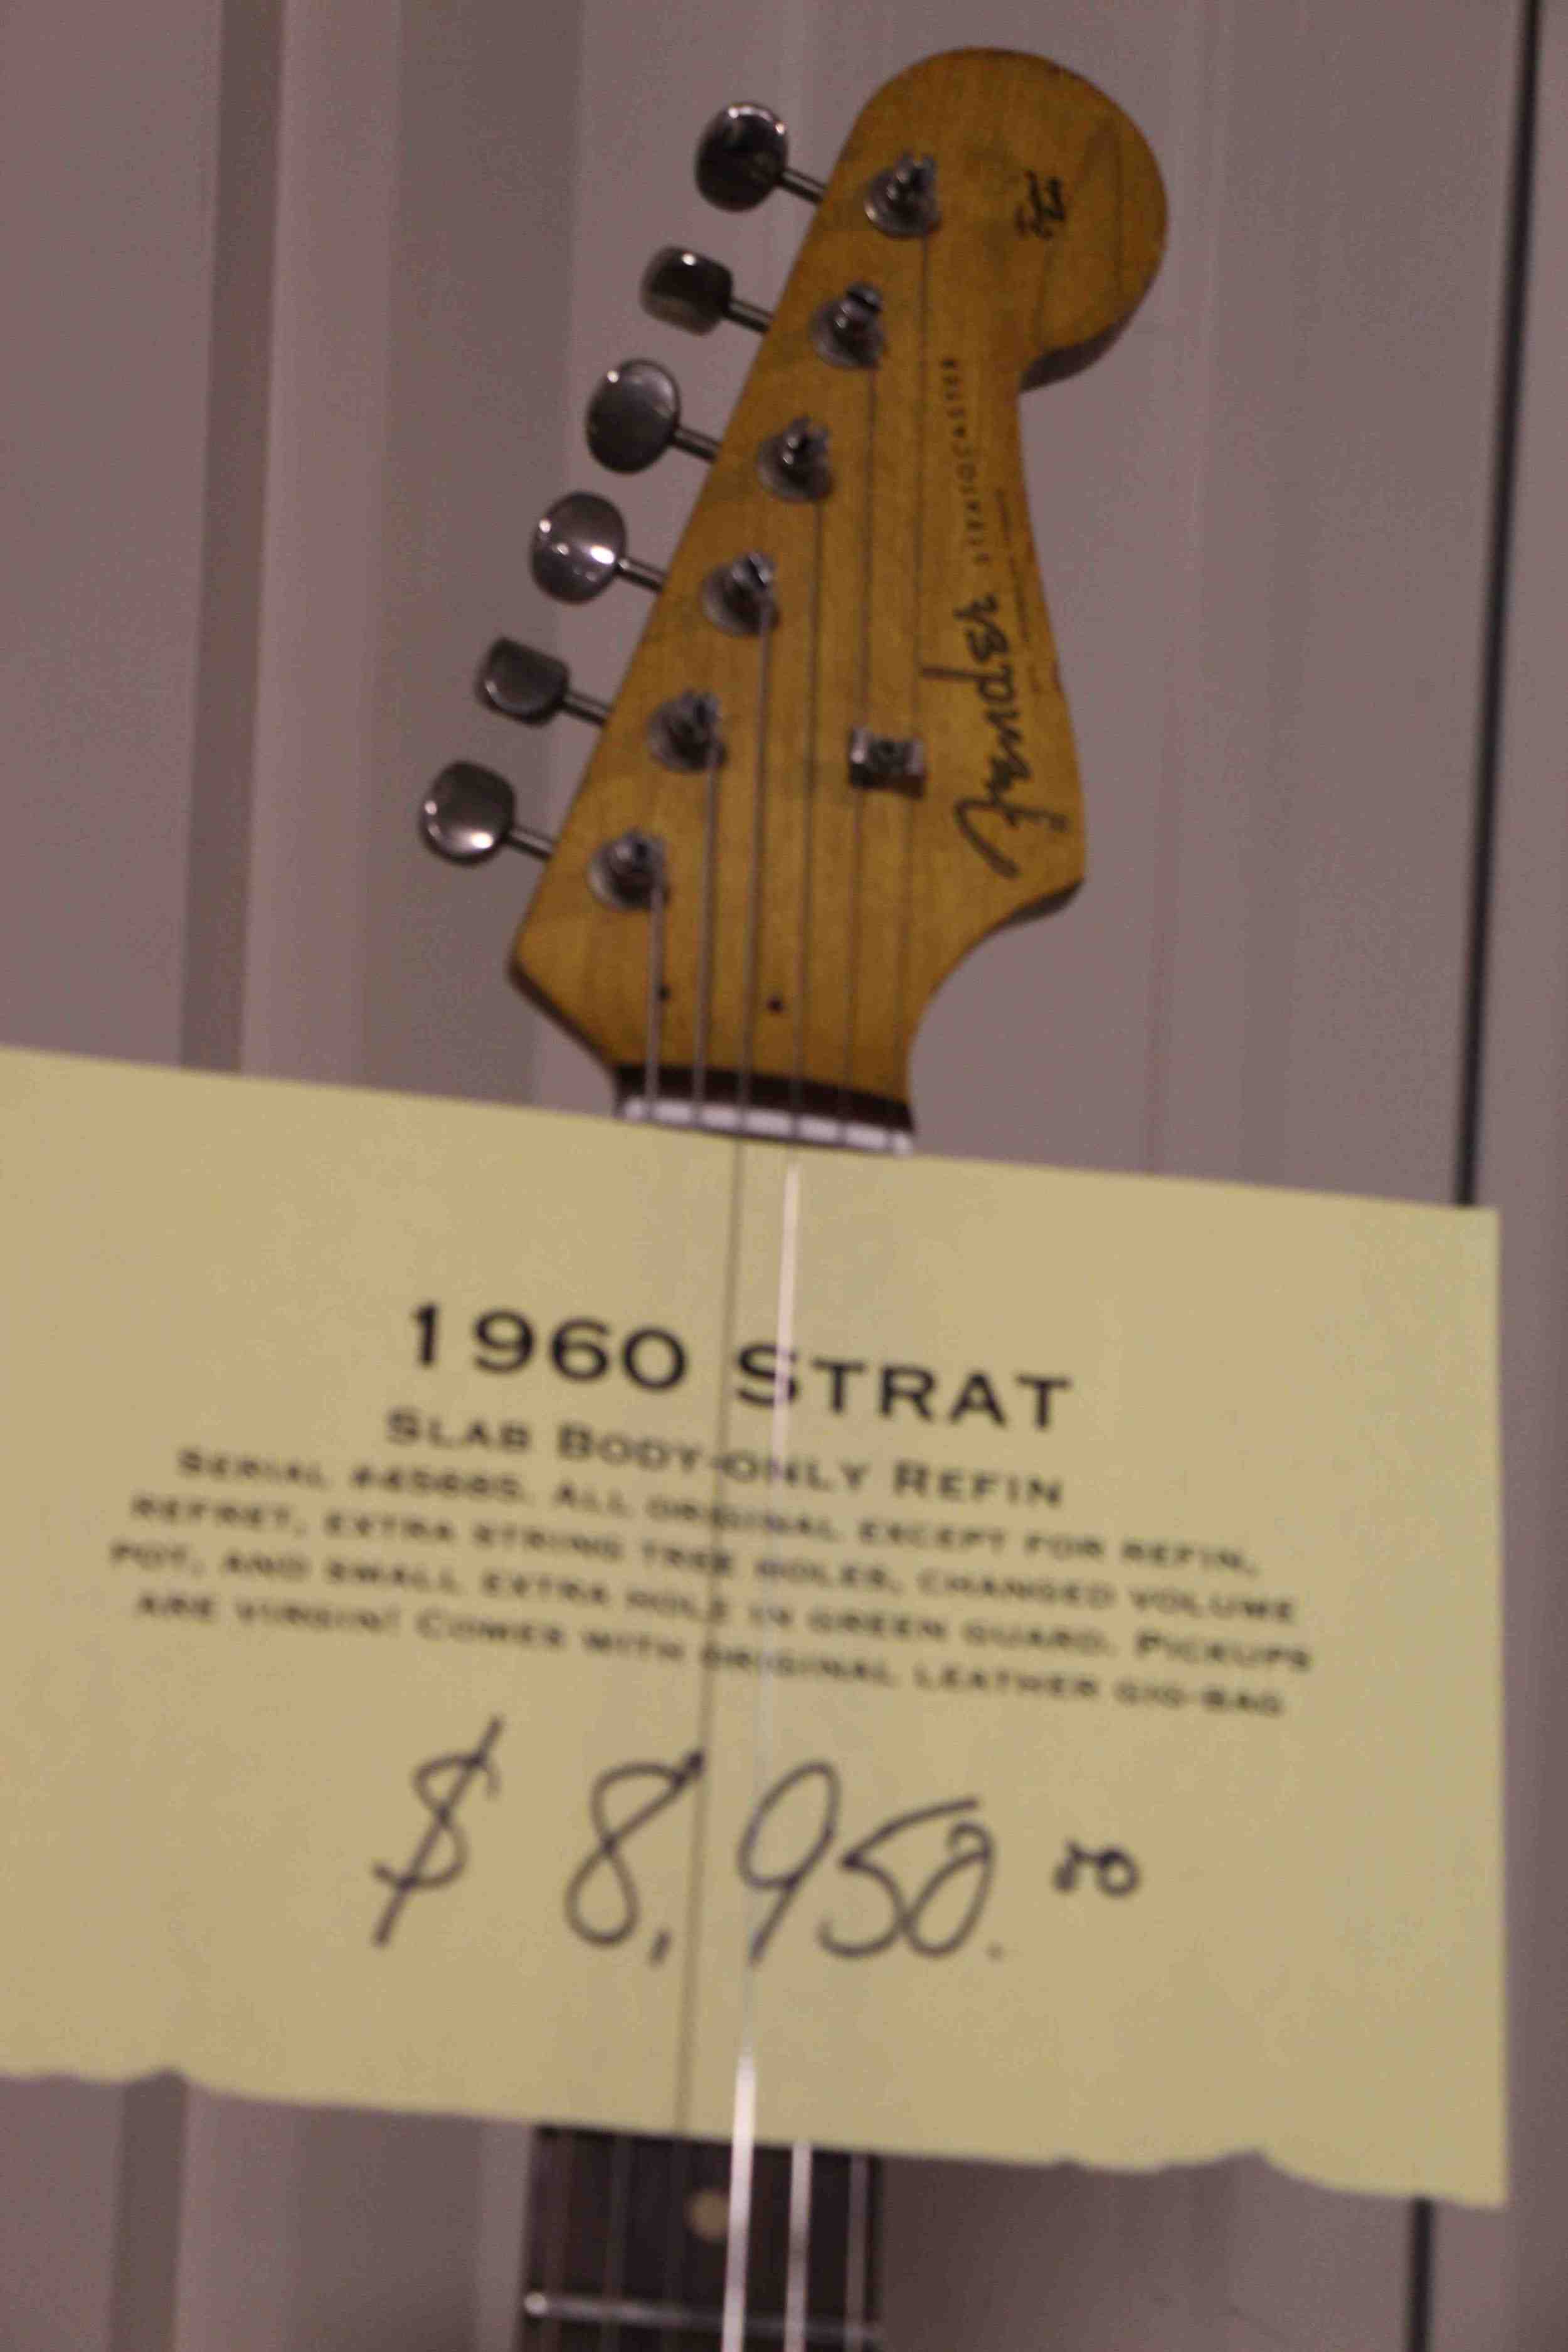 1960 fender stratocaster price tag.jpg